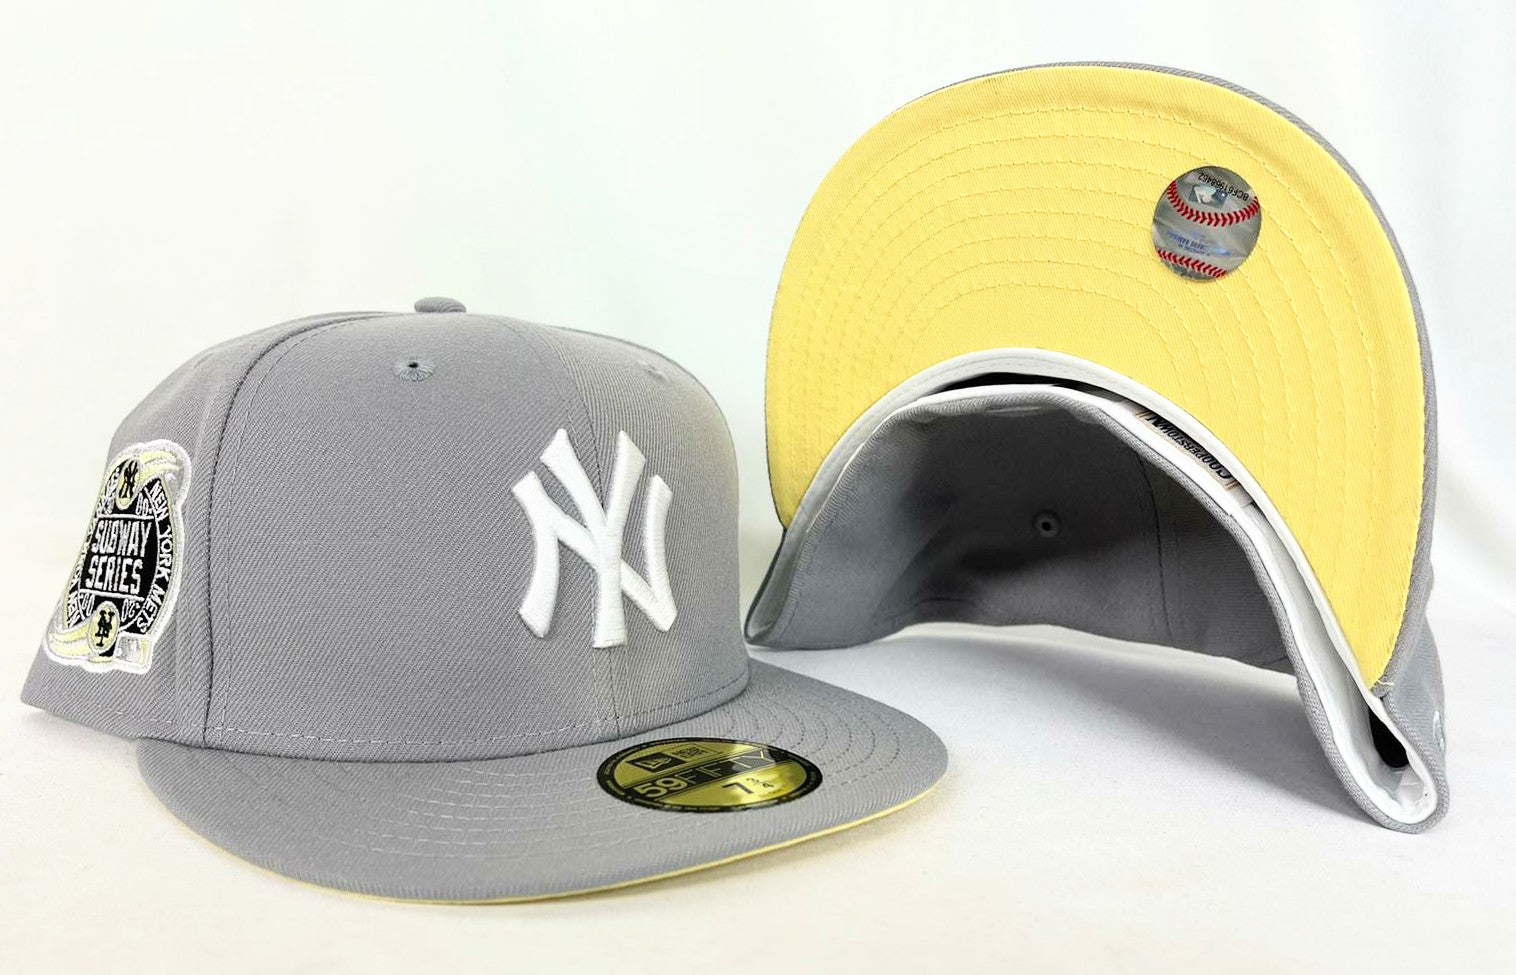 Gray New York Yankees Soft Yellow Bottom 2000 Subway Series New Era 59Fifty Fitted